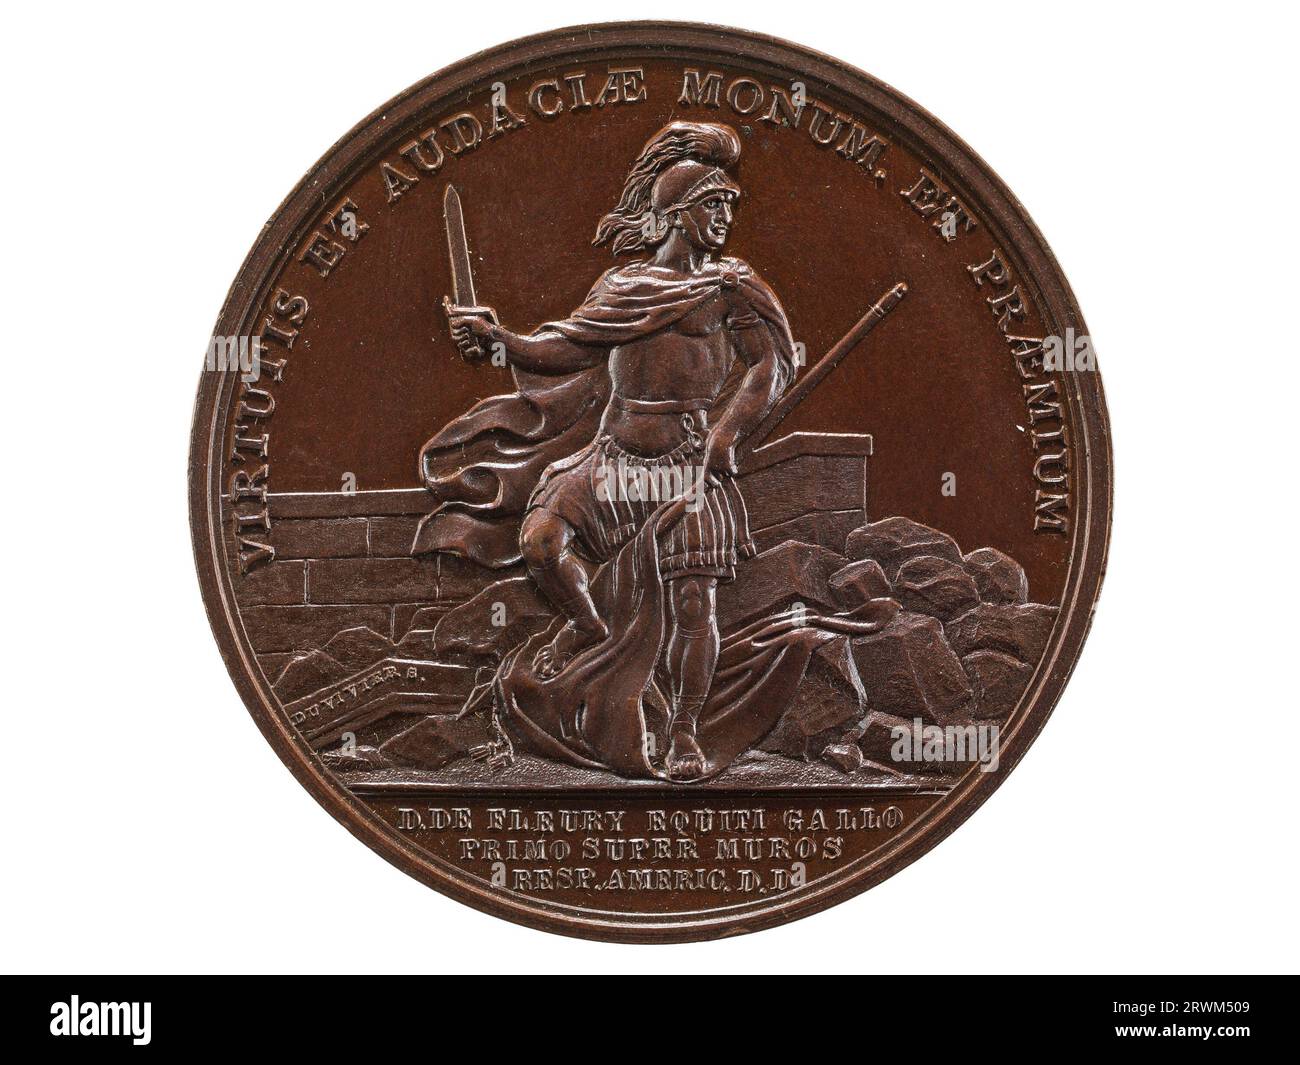 Medal, Francois Louis Teissedre de Fleury at Stony Point, 1779/2880, obverse. 1992.0121.0004. Stock Photo